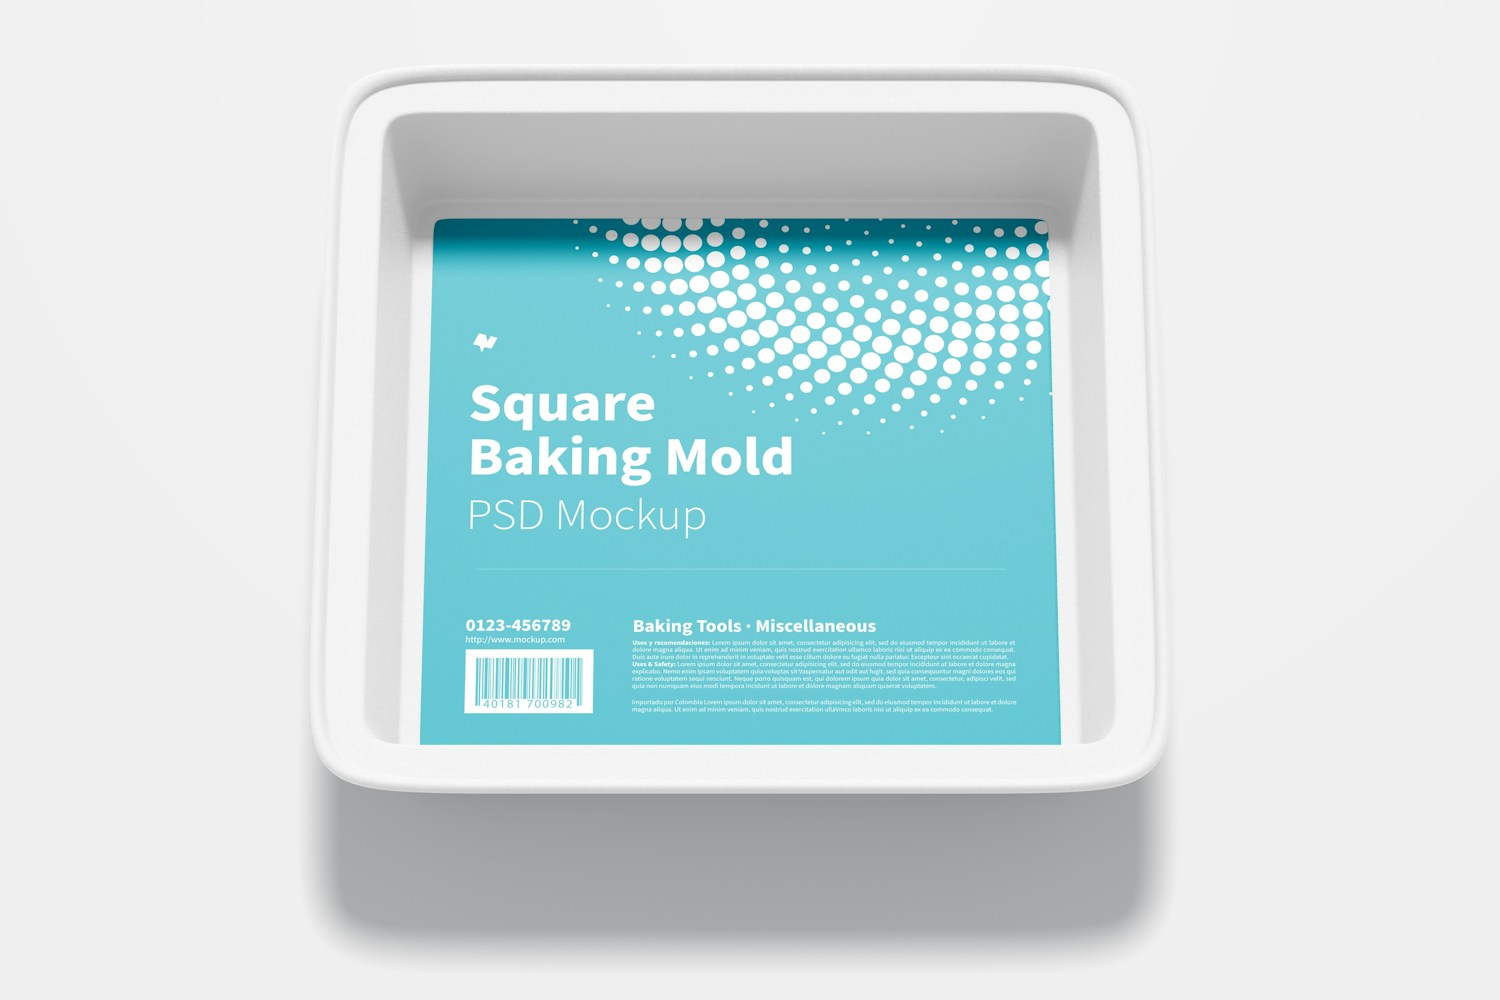 Square Baking Mold Mockup, Top View